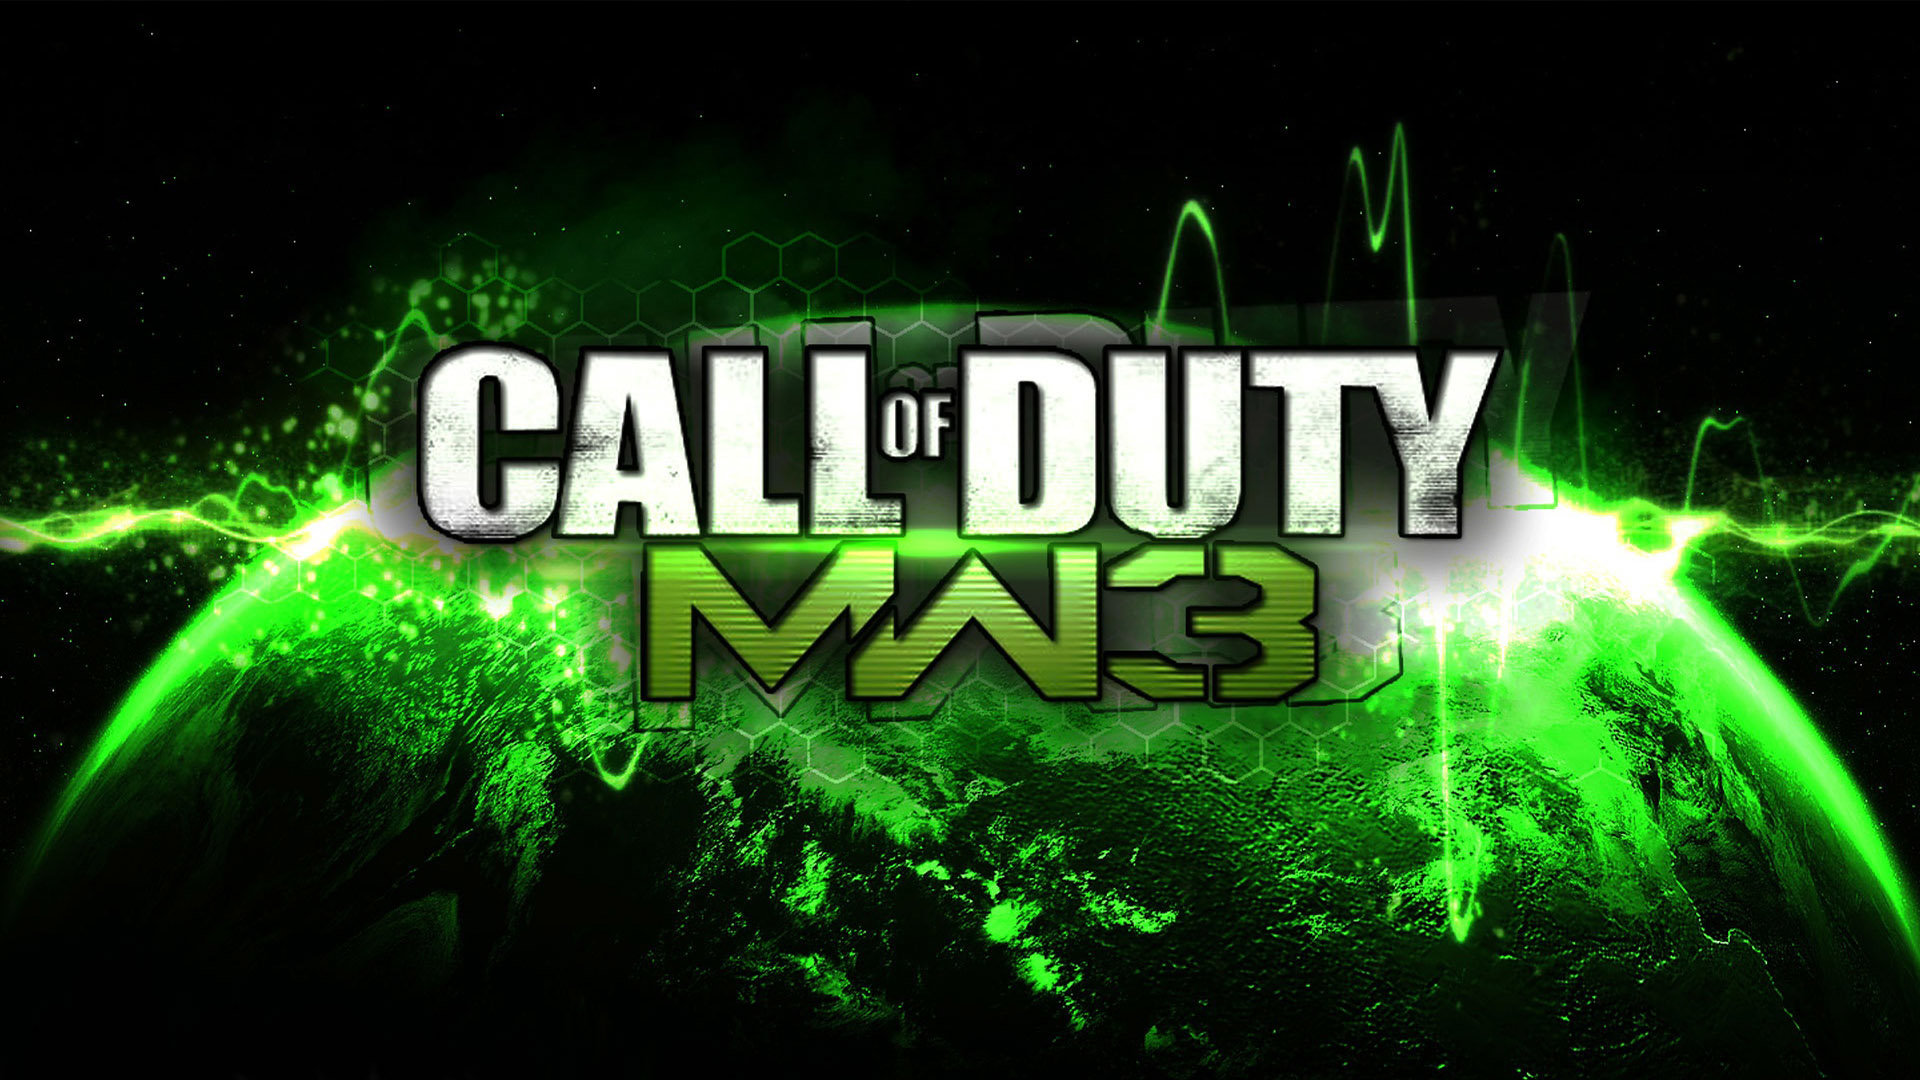 Free download Call Of Duty: Modern Warfare 3 (MW3) background ID:378489 full hd 1920x1080 for desktop